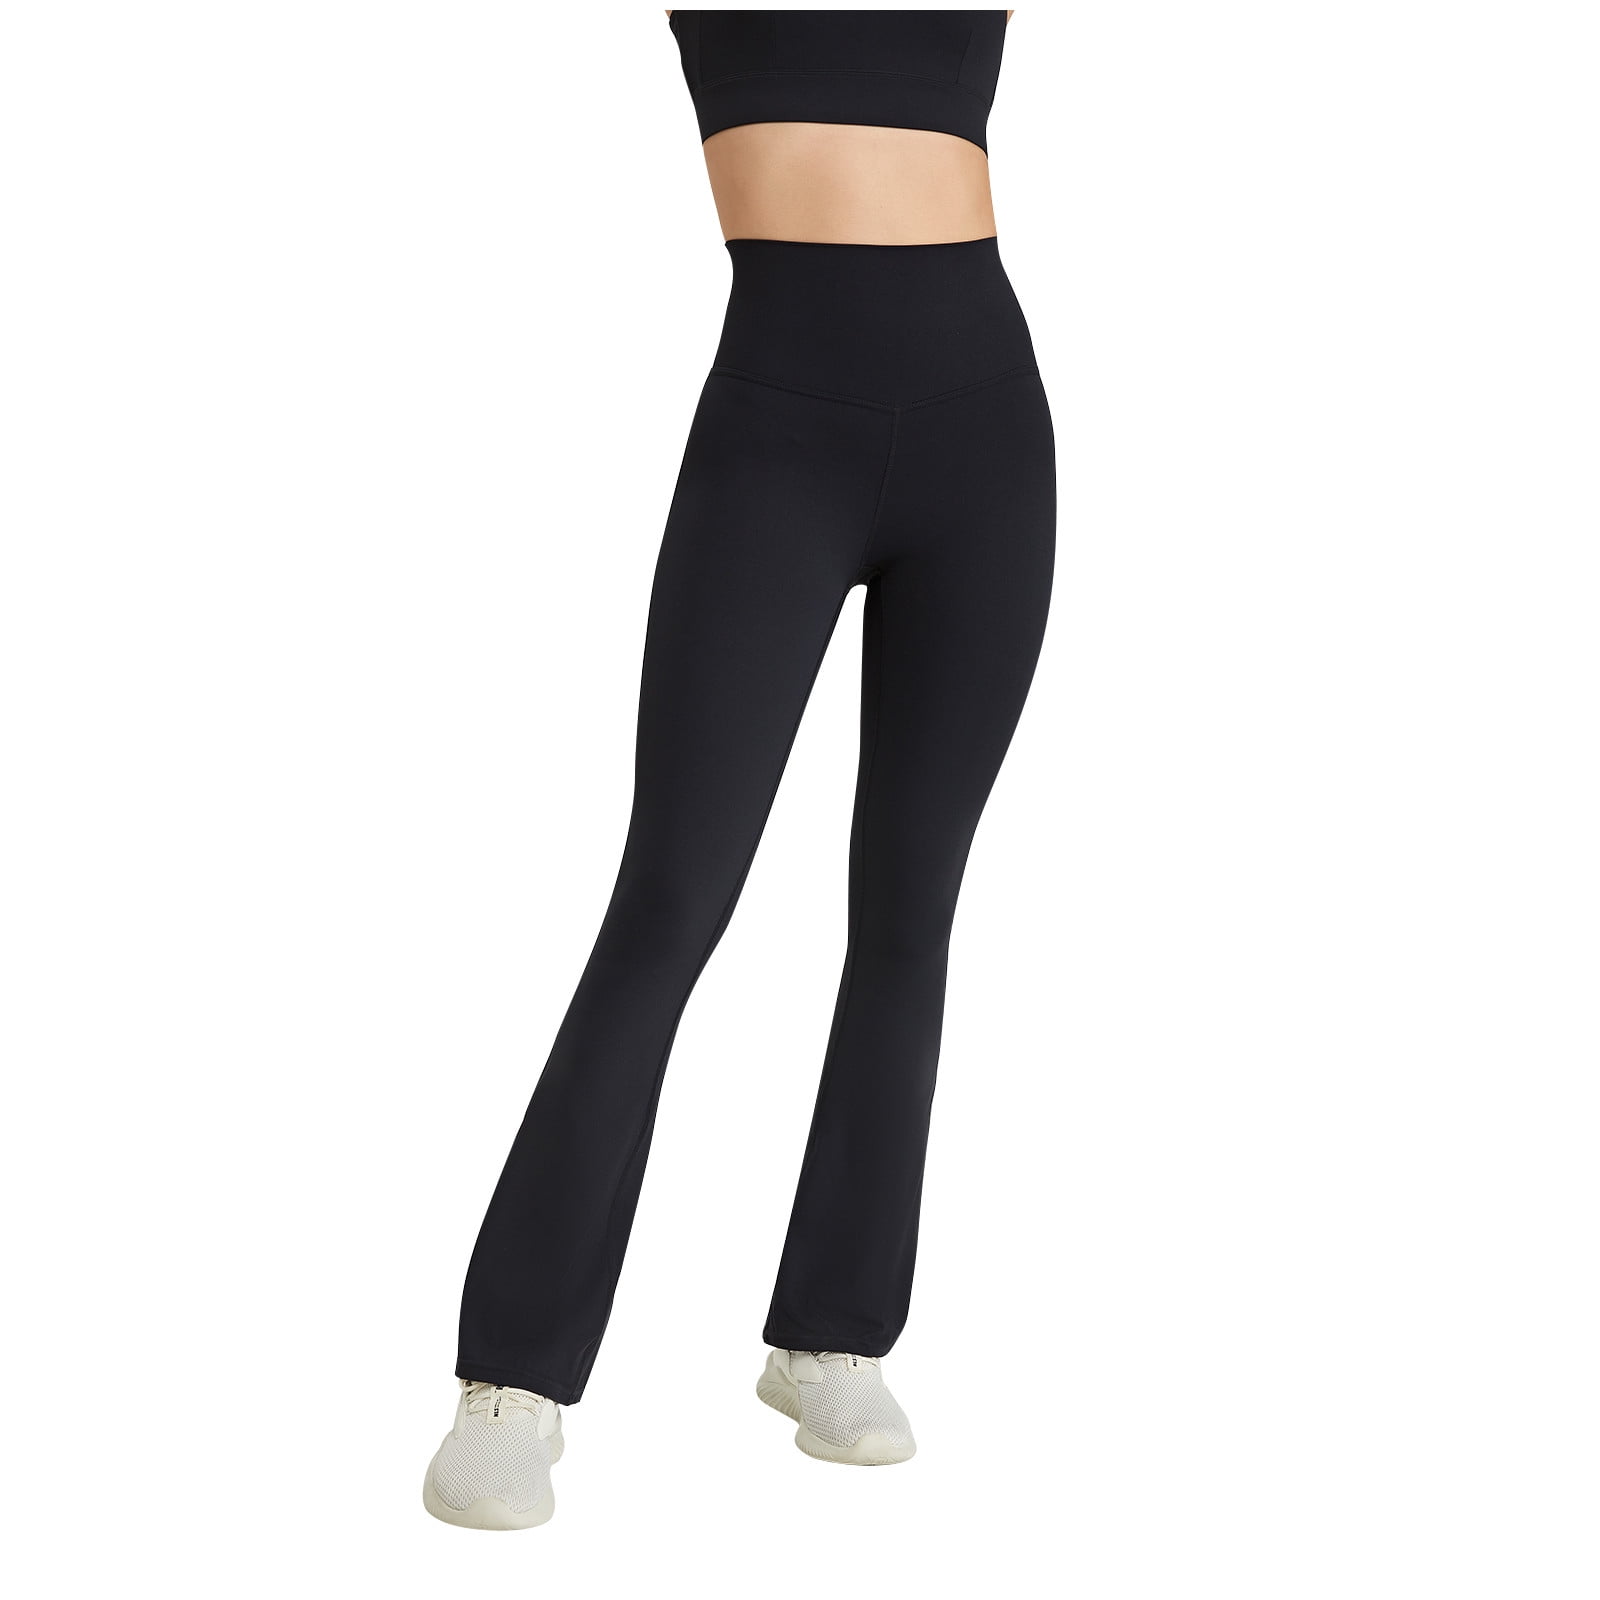 YYDGH Flare Leggings for Women Bootcut High Waisted Yoga Pants Workout  Bootleg Pants Black XL